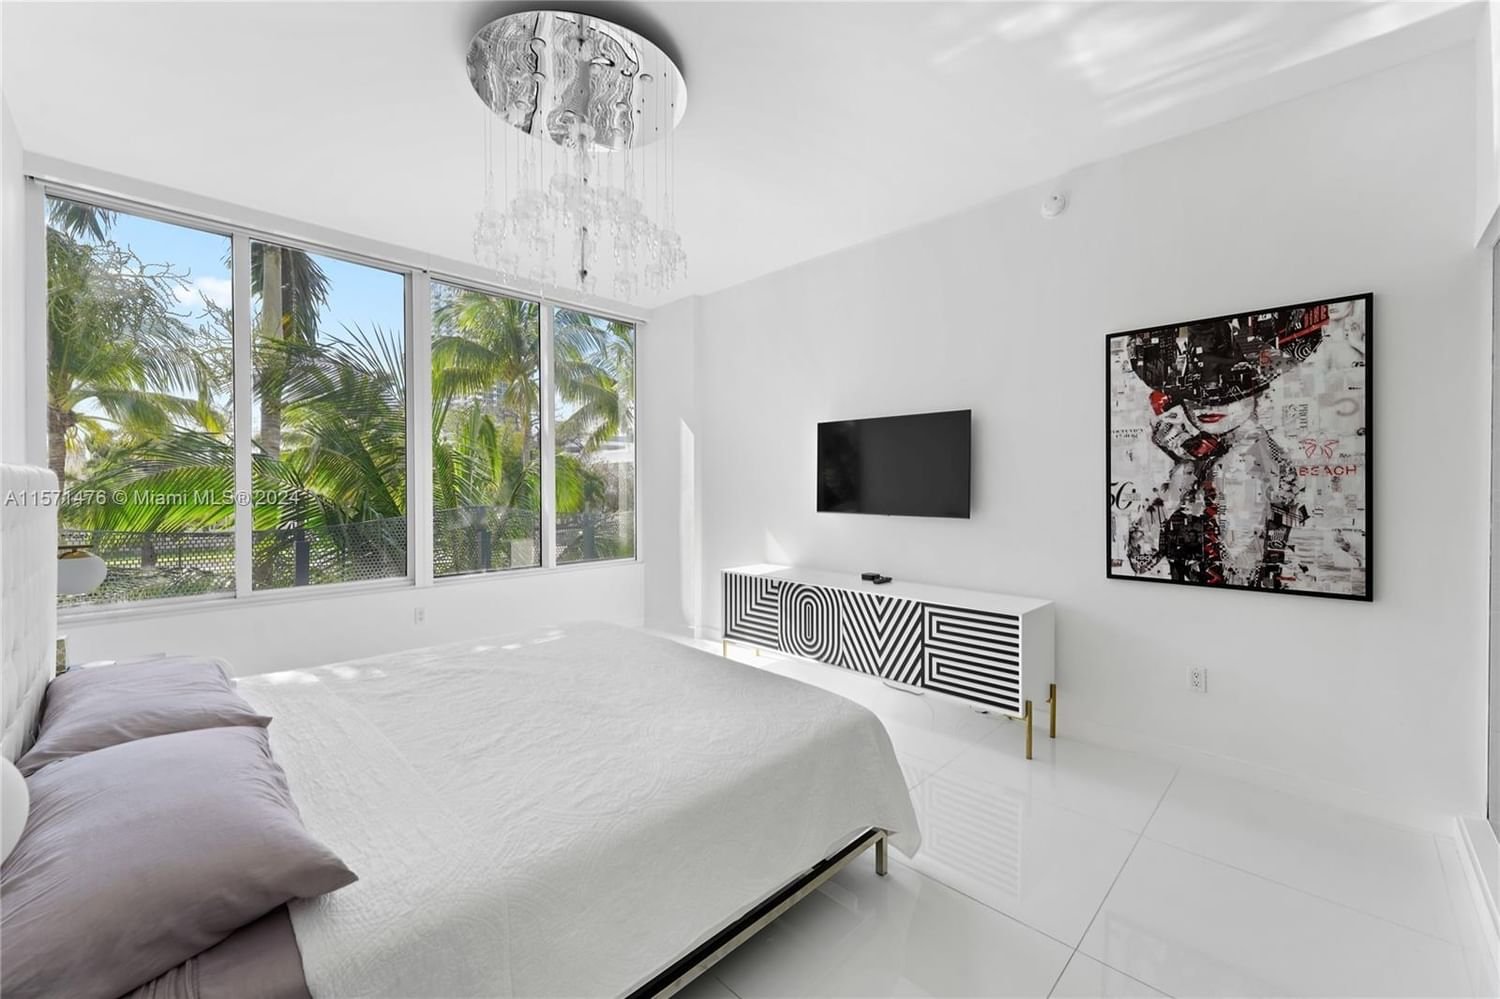 Real estate property located at 2100 Park Ave #201, Miami-Dade County, ARTEPARK SOUTH CONDO, Miami Beach, FL